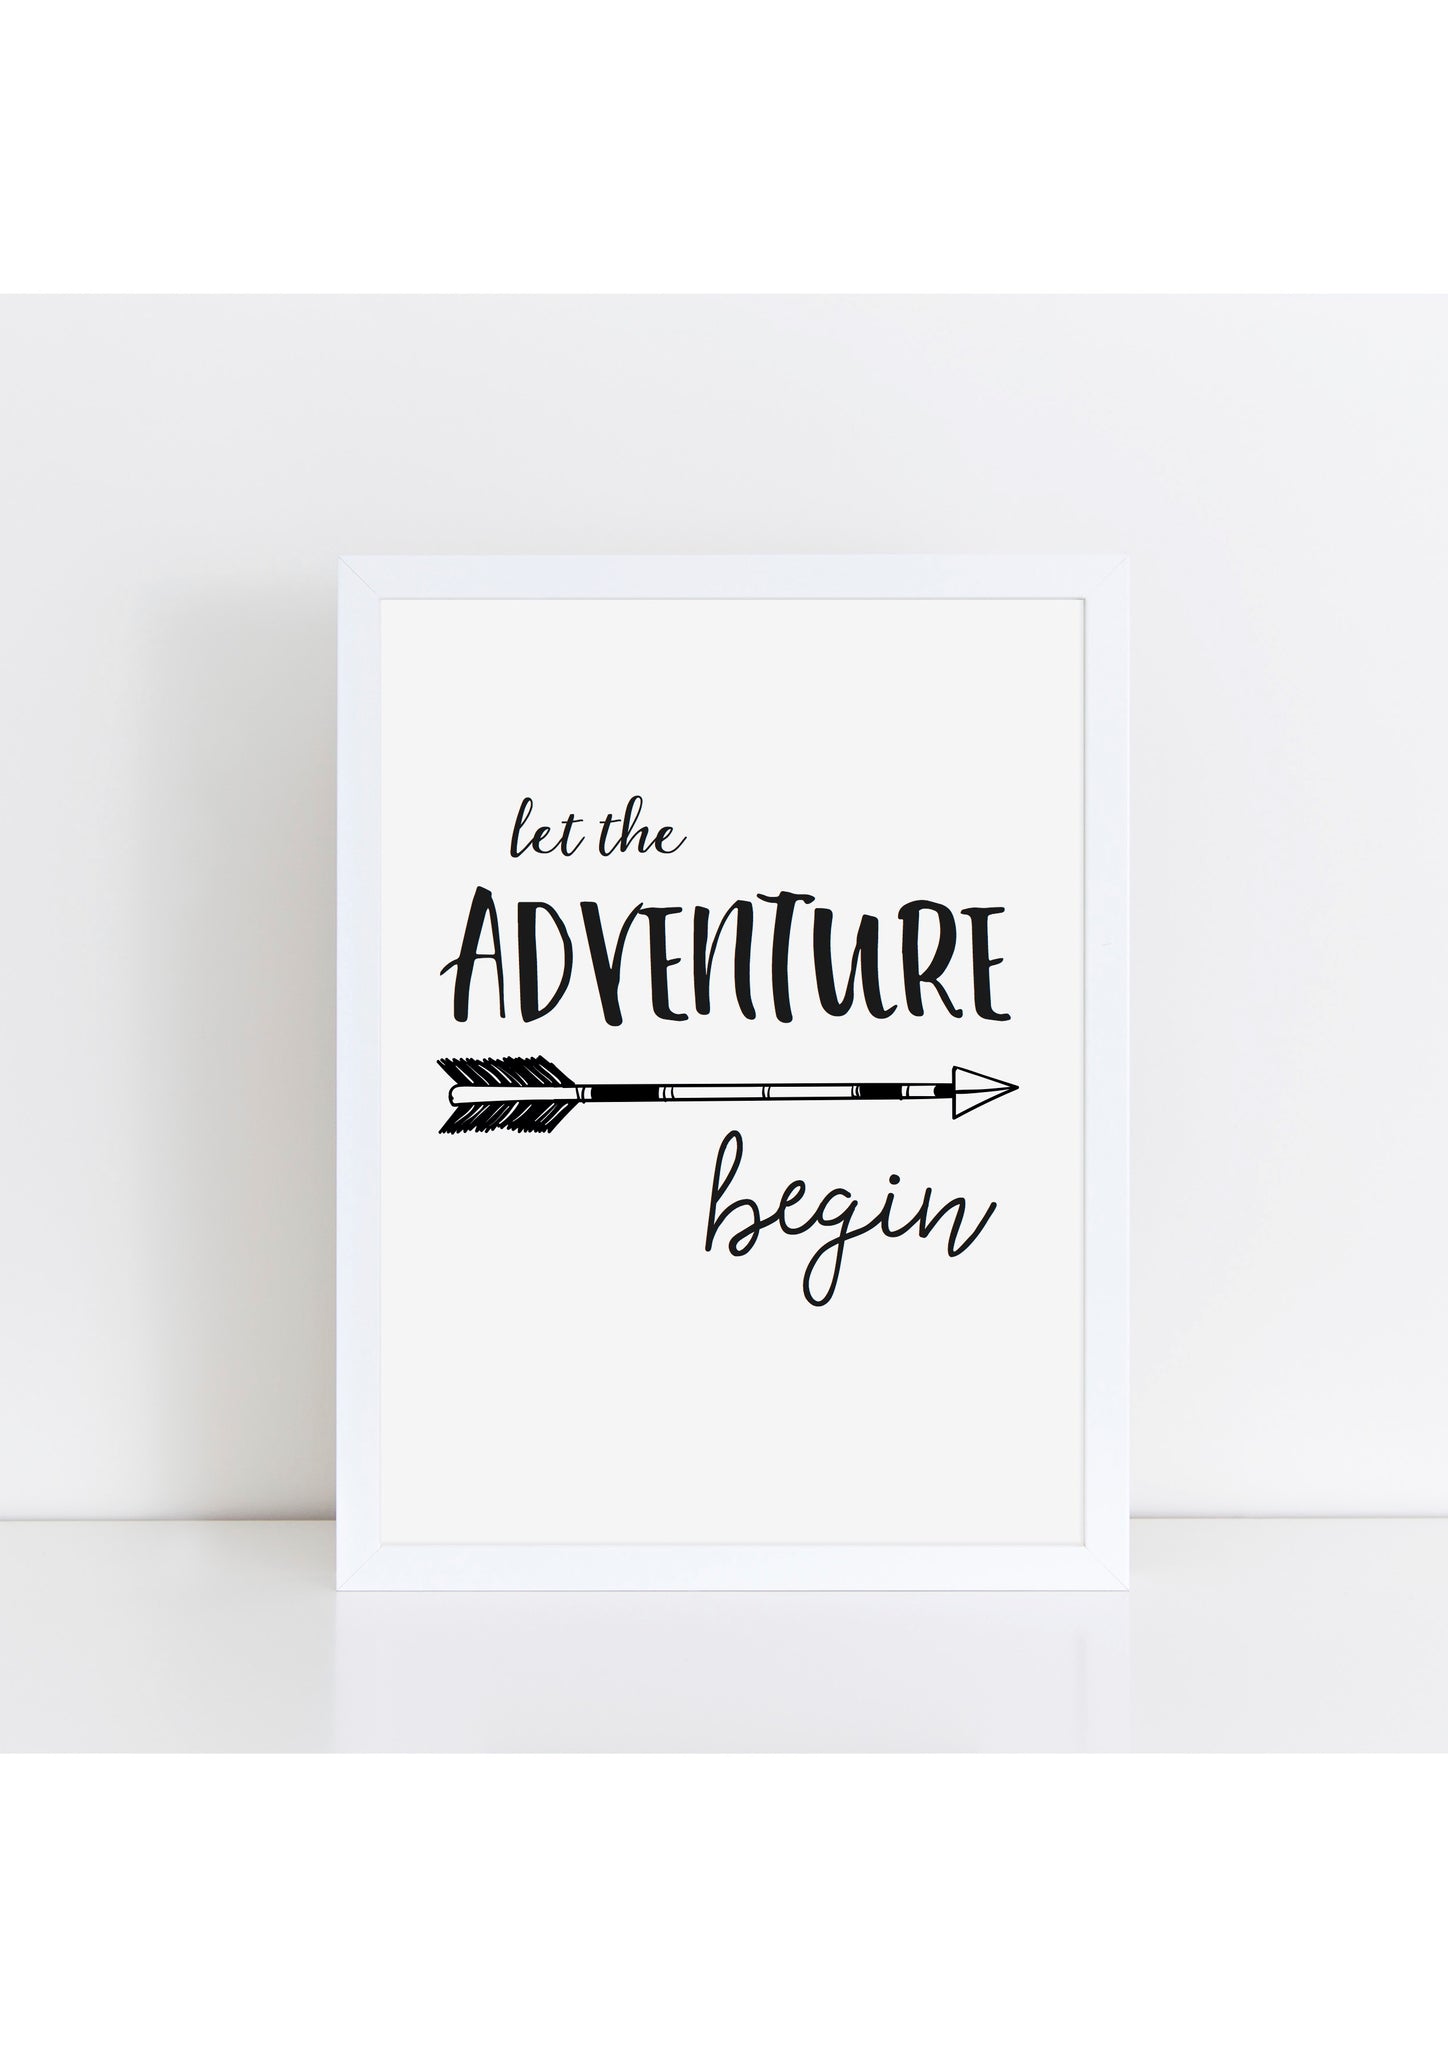 Adventure Begin Print